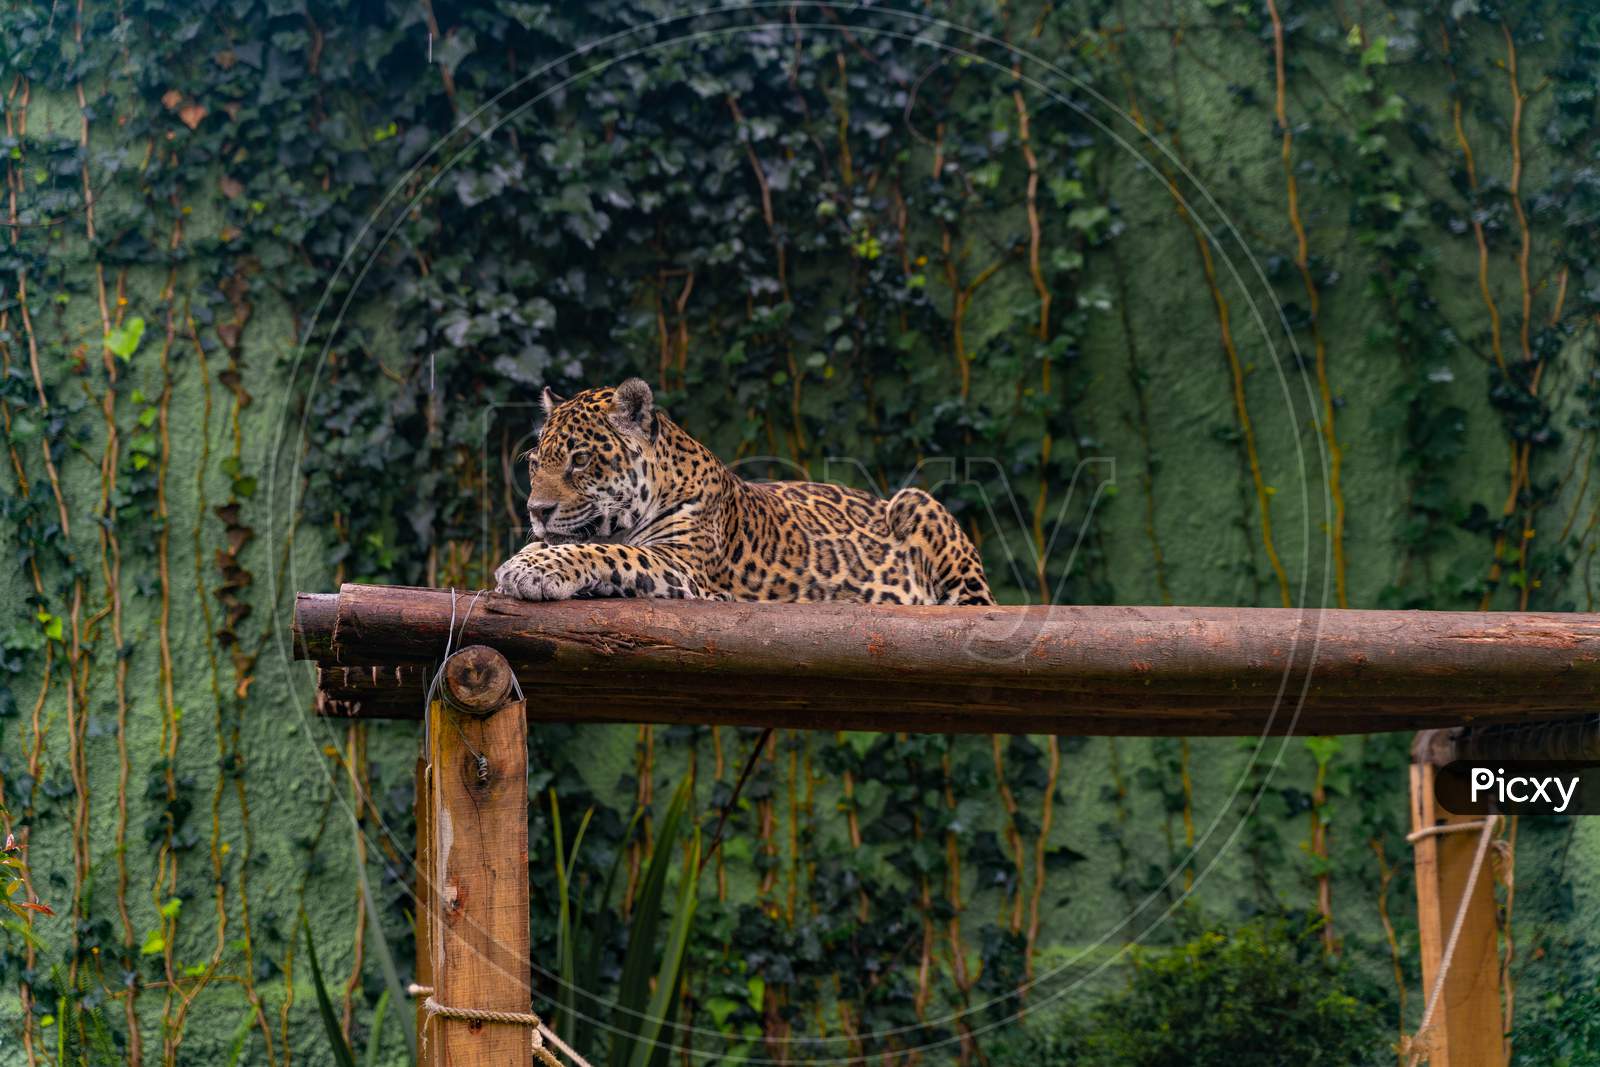 Jaguar Resting In The Grass, Nature, Wild Animals.